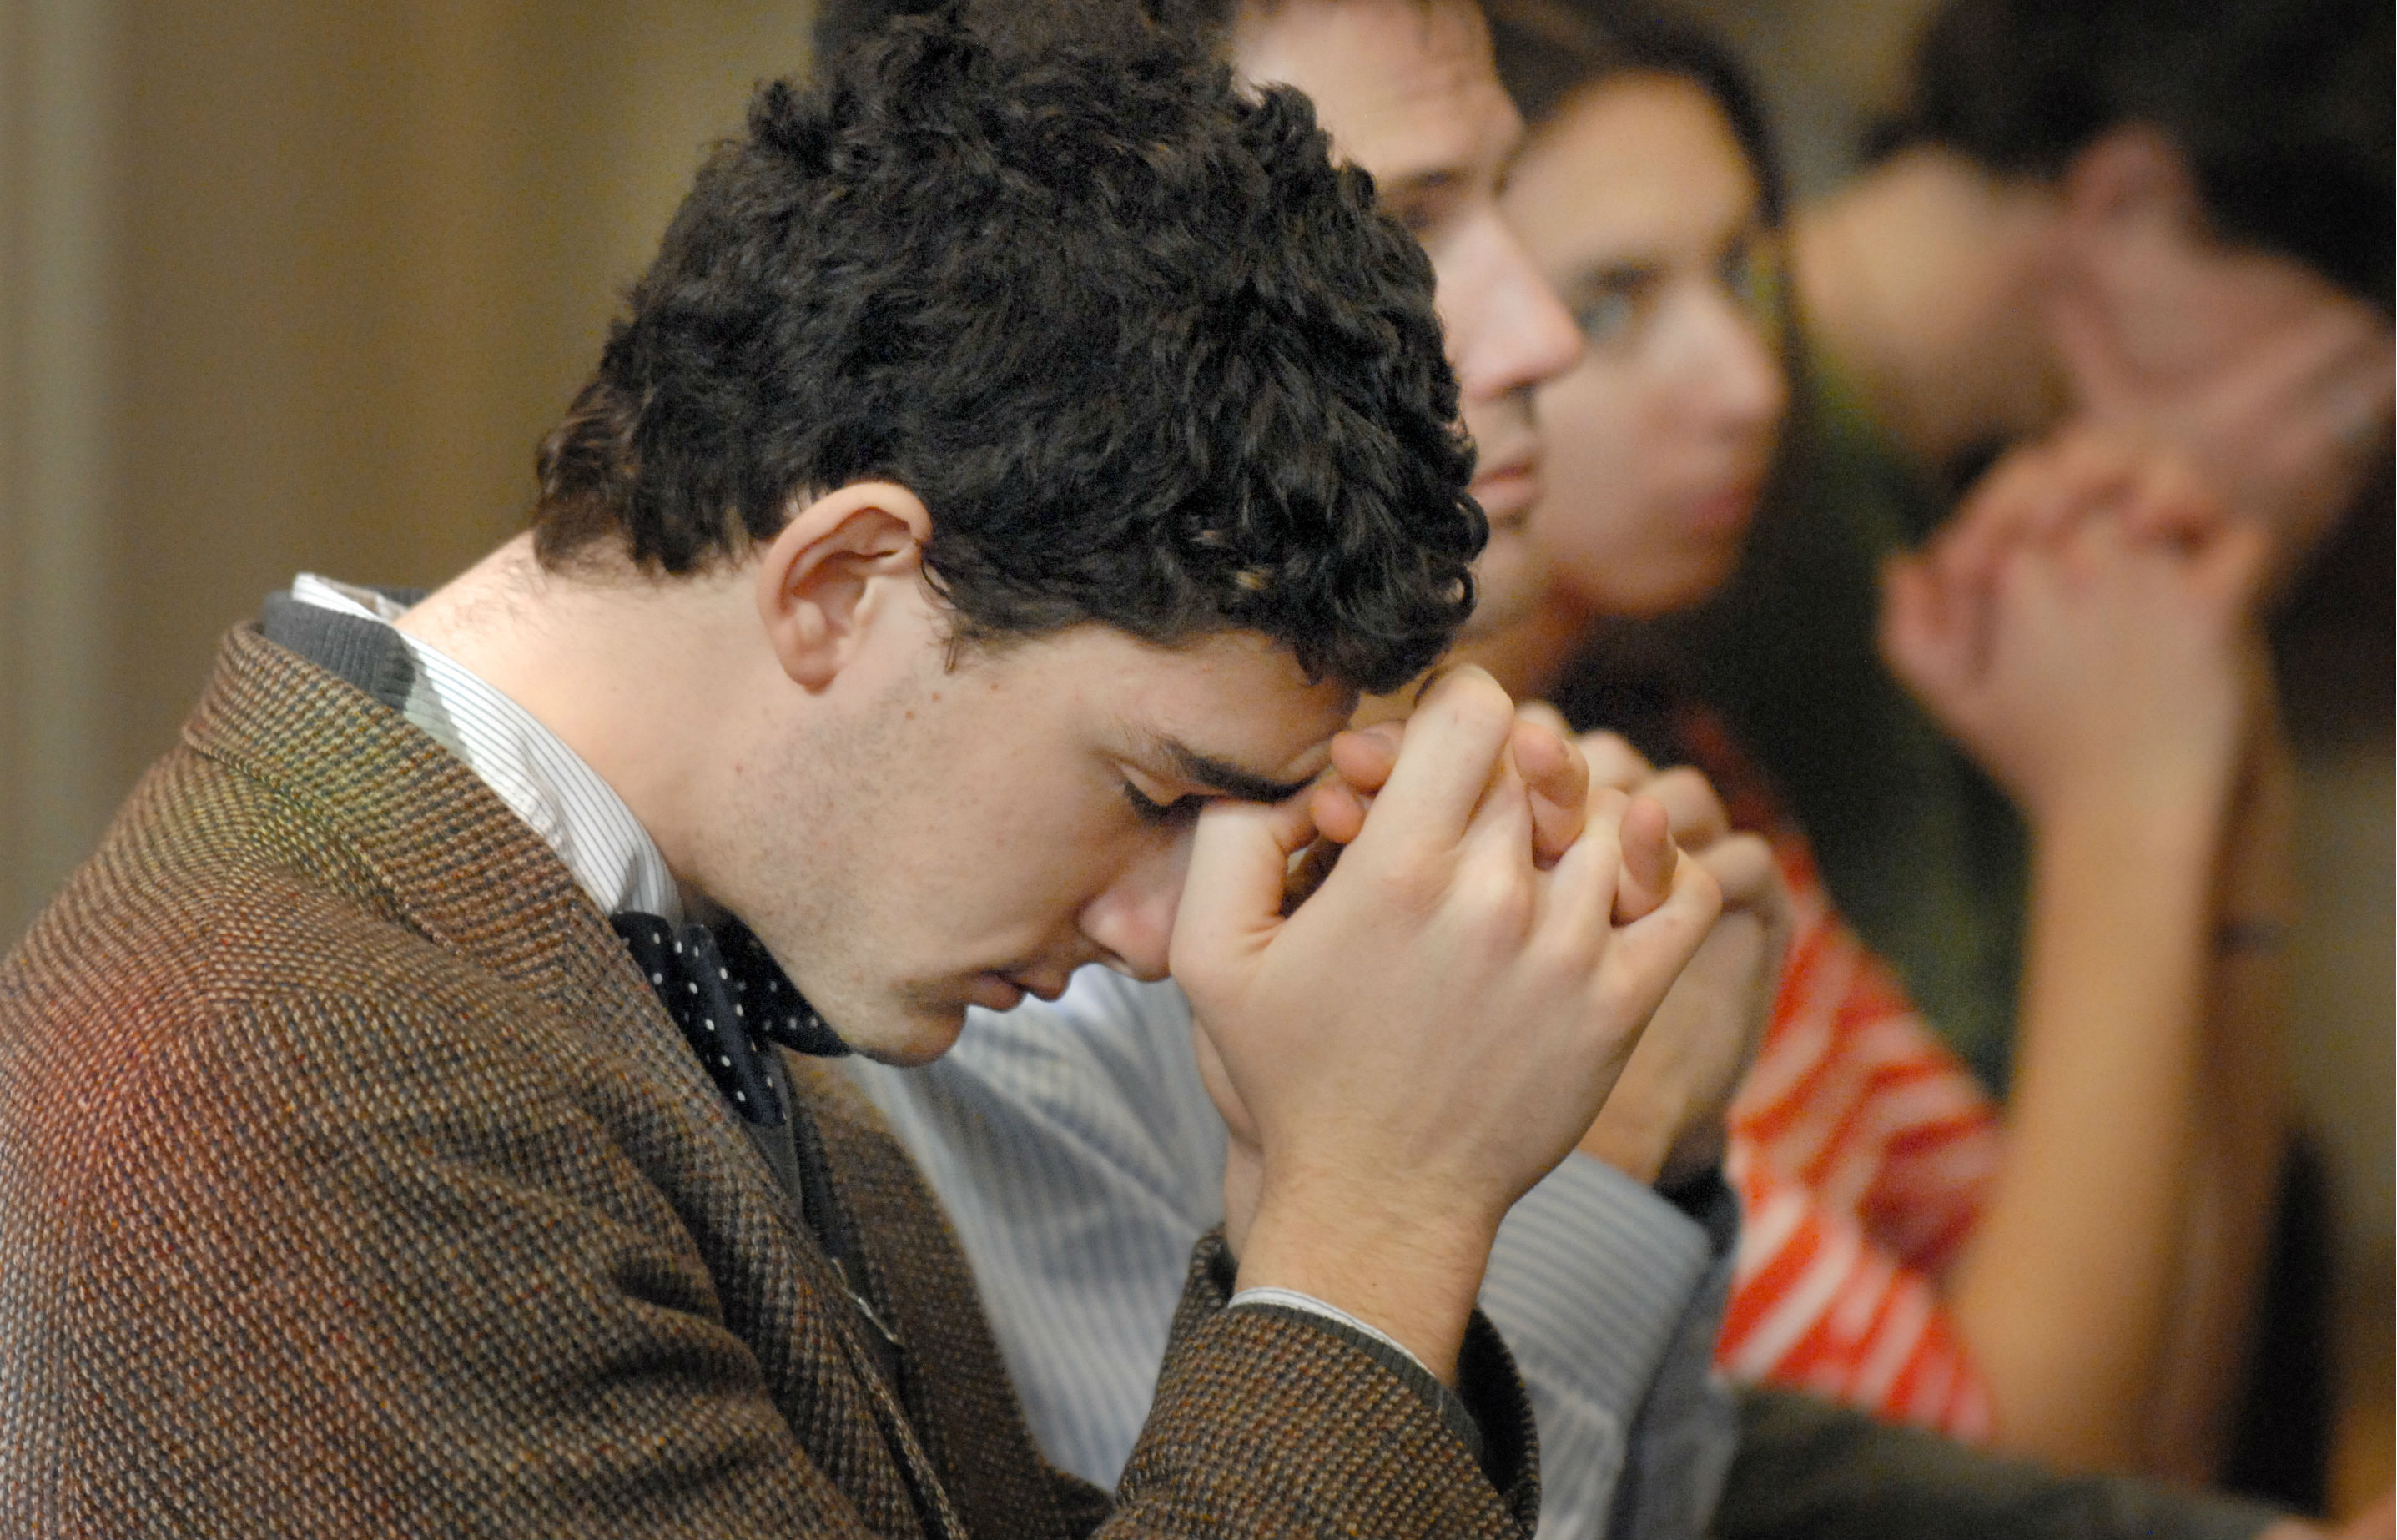 US Catholics urged to pray novena ahead of election